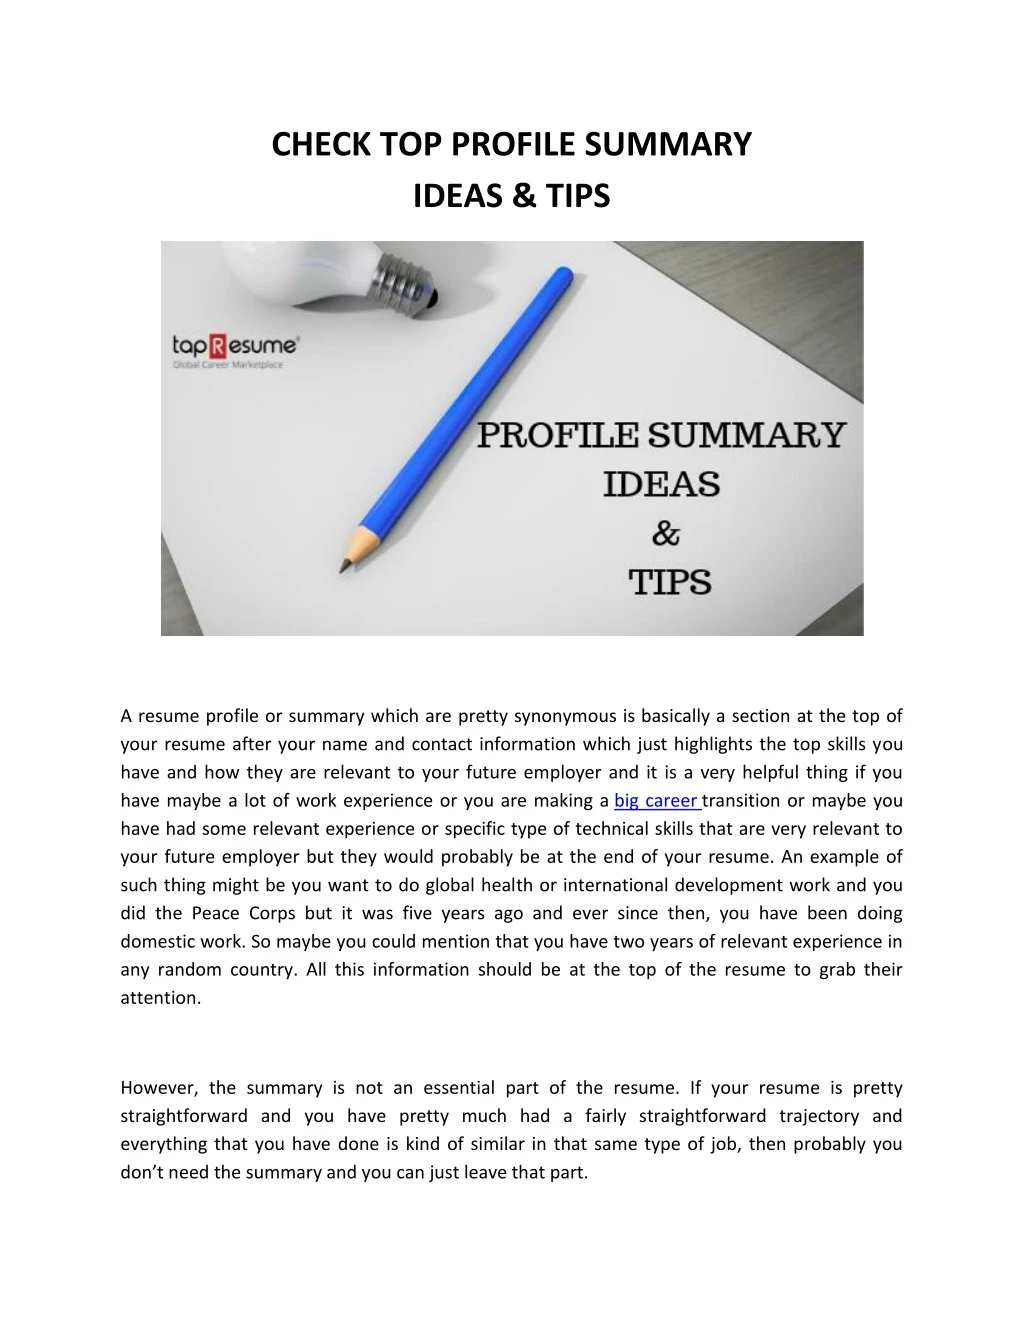 check top profile summary ideas tips